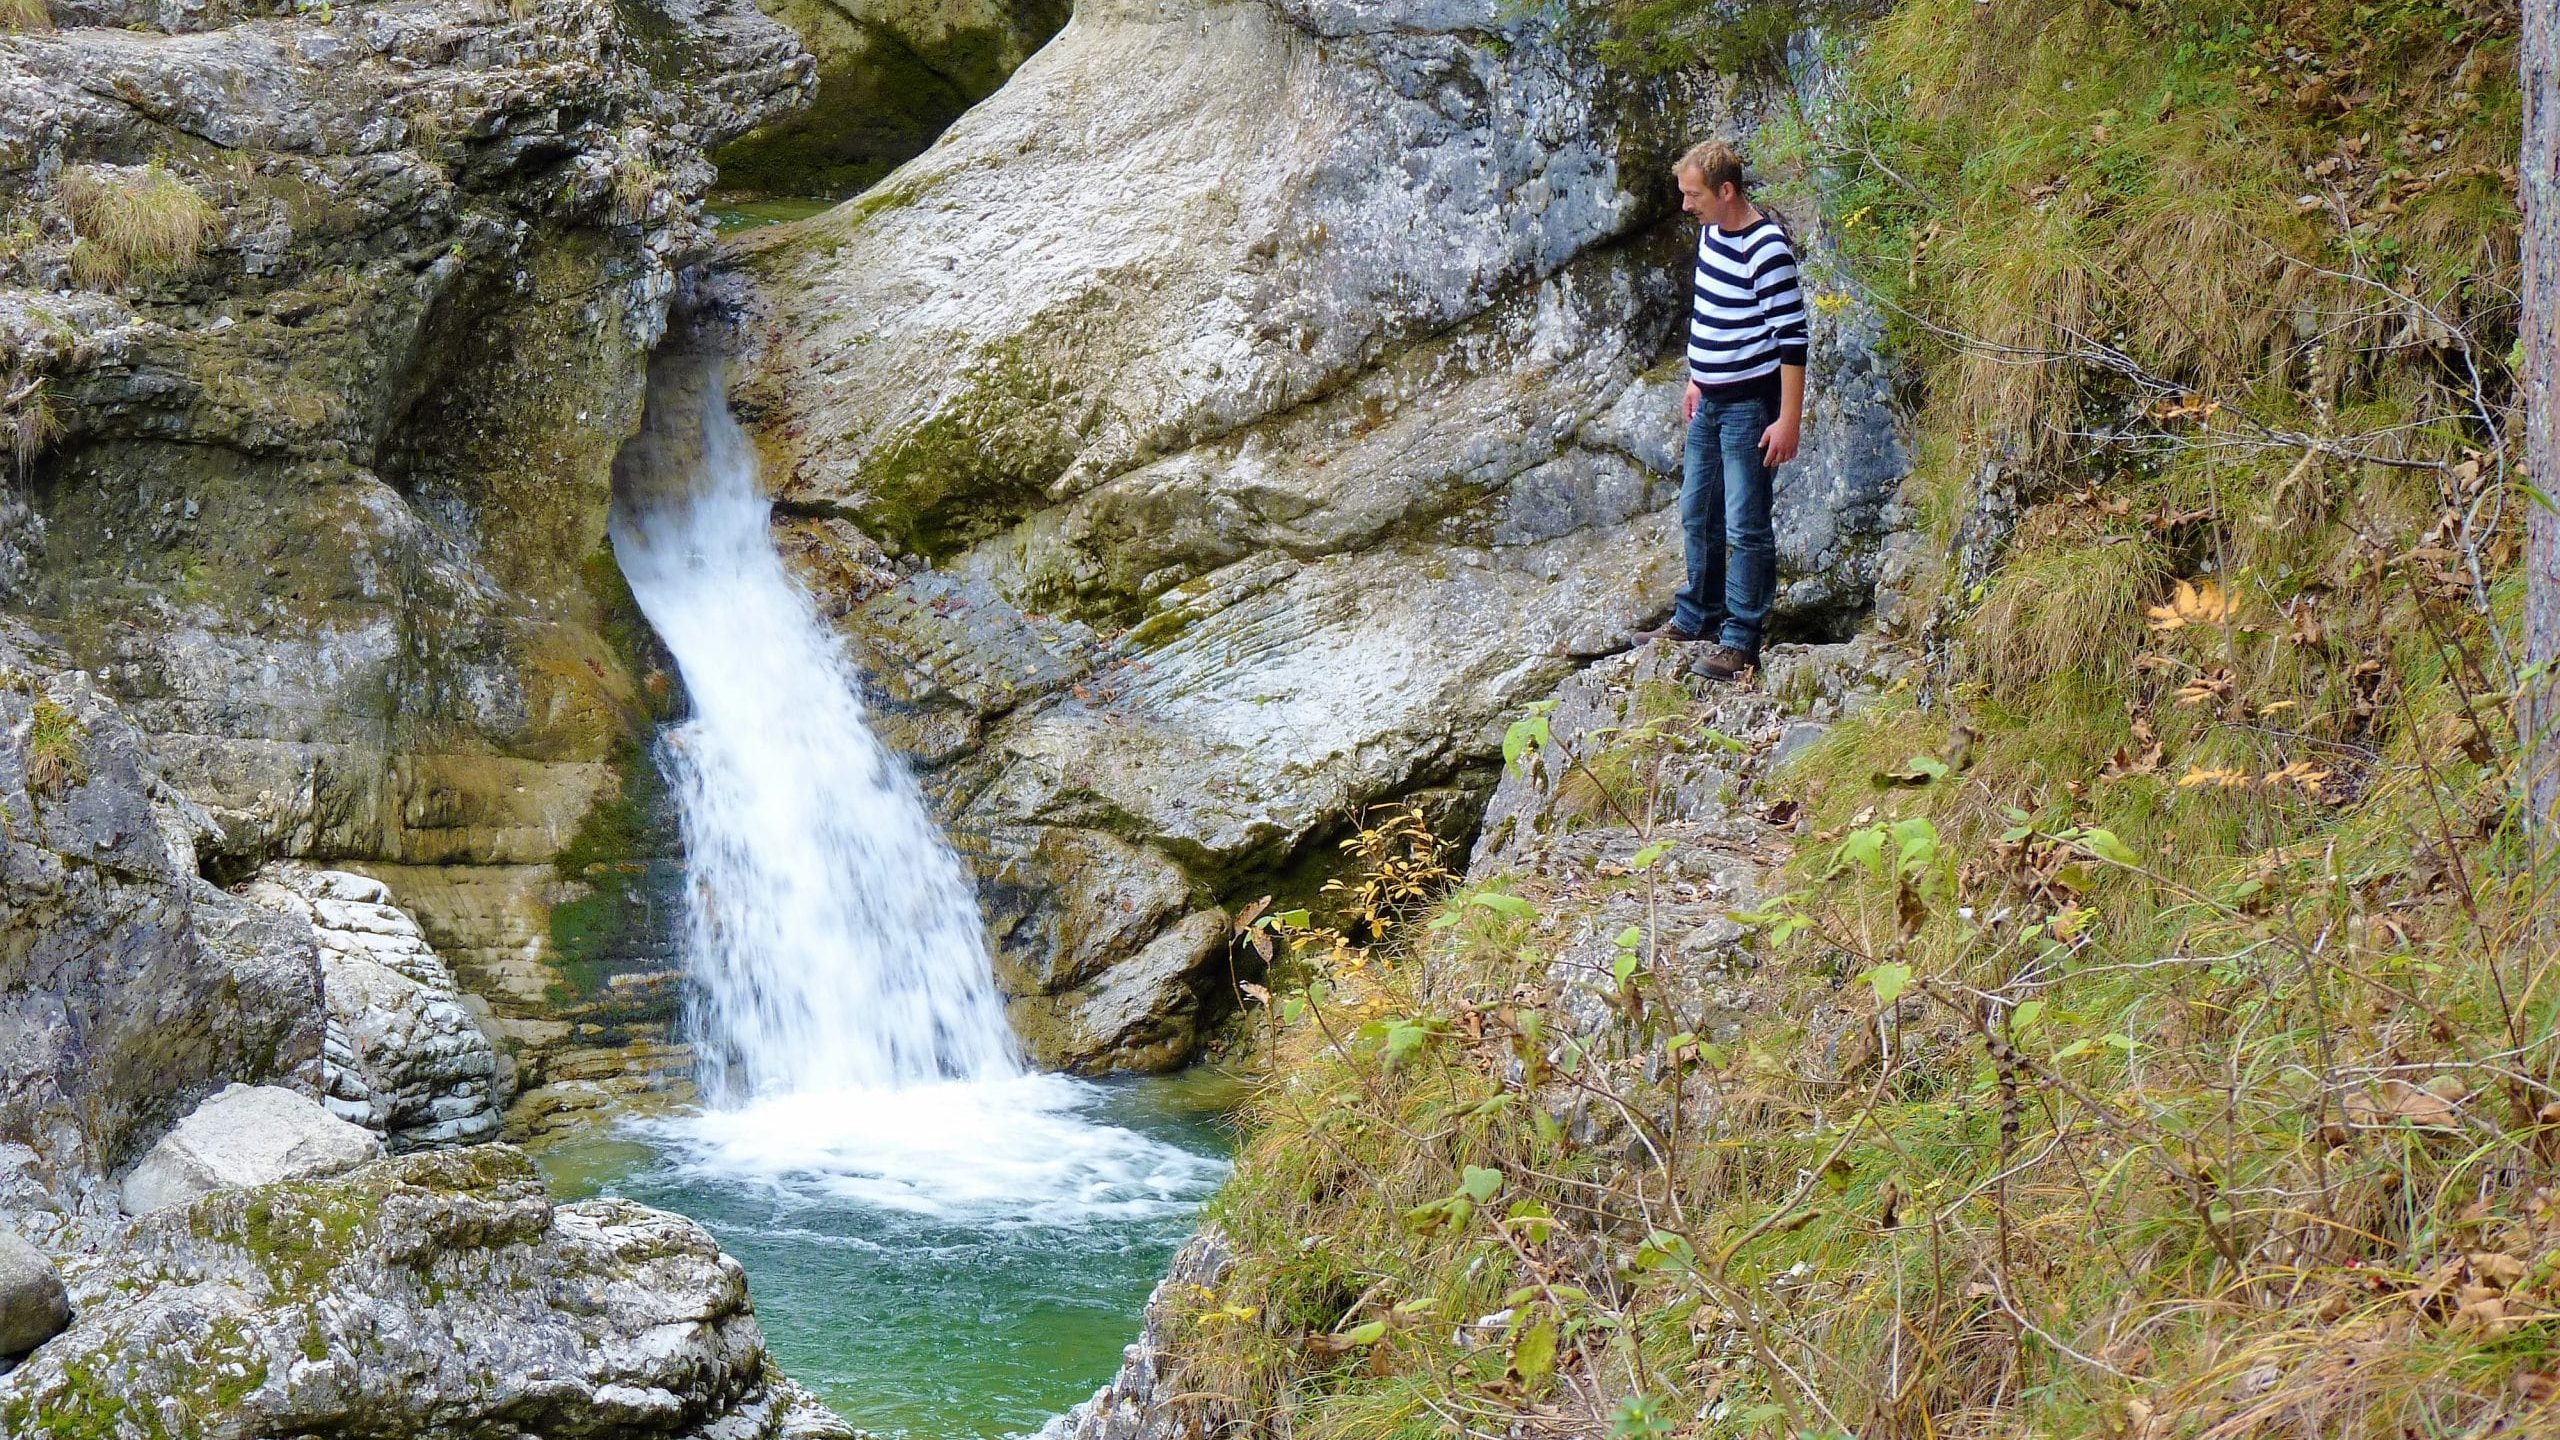 Garmisch wandern: Auf dem Weg zum Kuhflucht-Wasserfall 